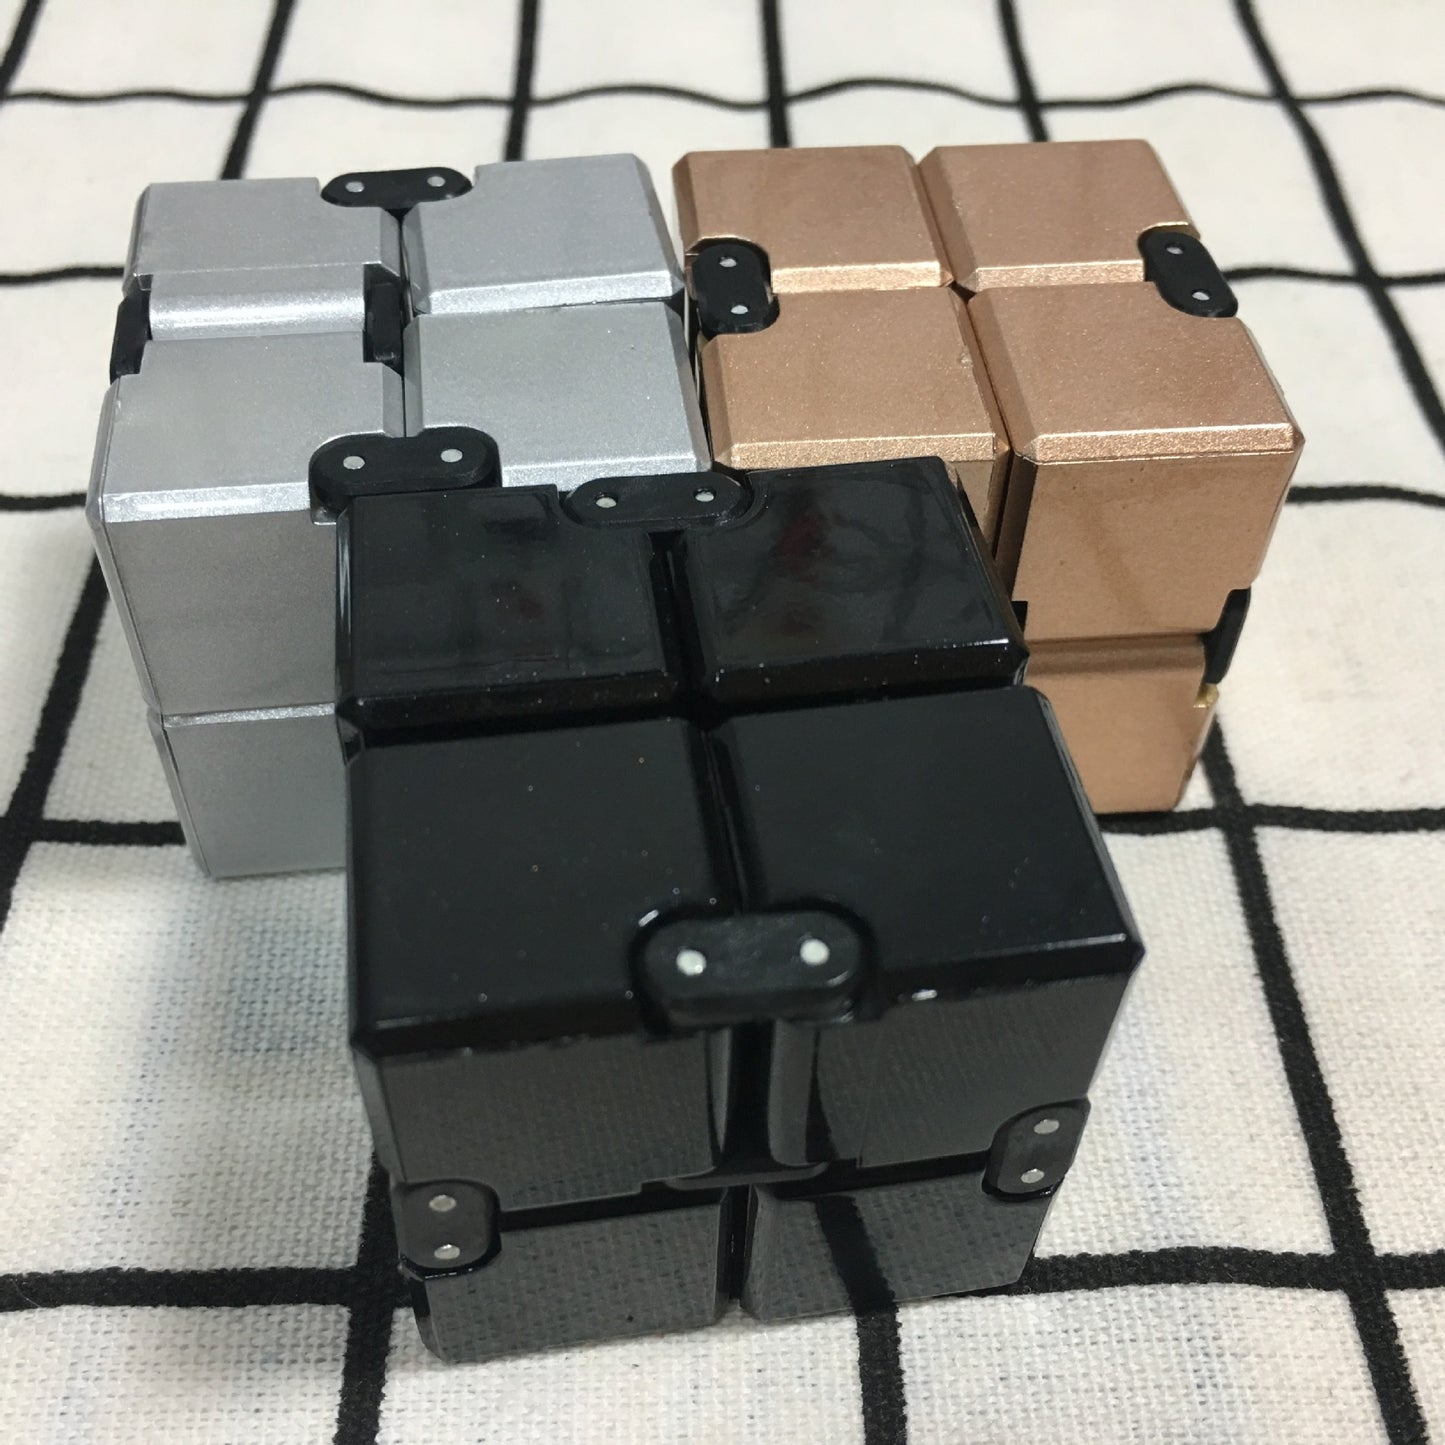 Magic Infinity Cube Gold, Silver, Black - SensoryFun.com